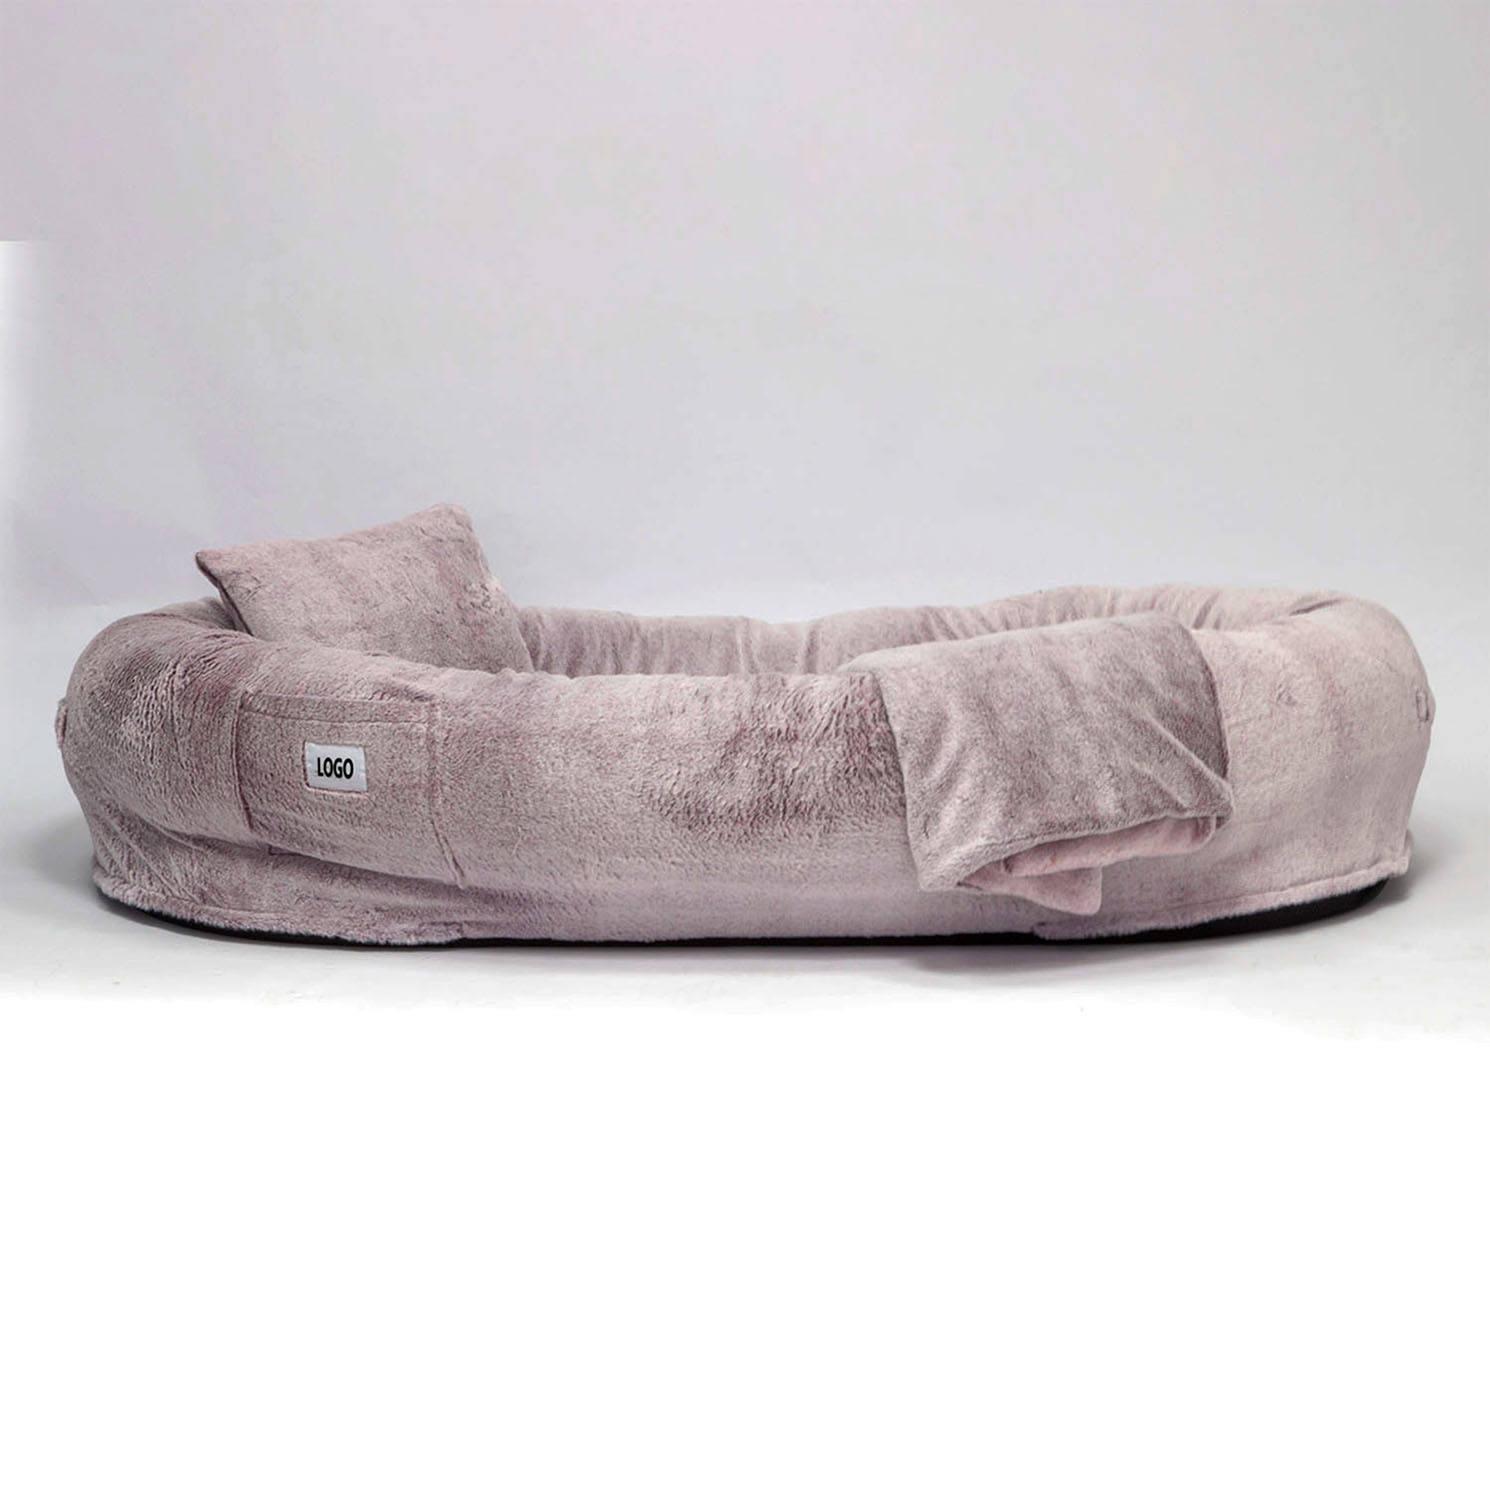 Human Bed Dog Human Dog Large Bedthe Pink Stuff Dog Bedshuman Sized Bed